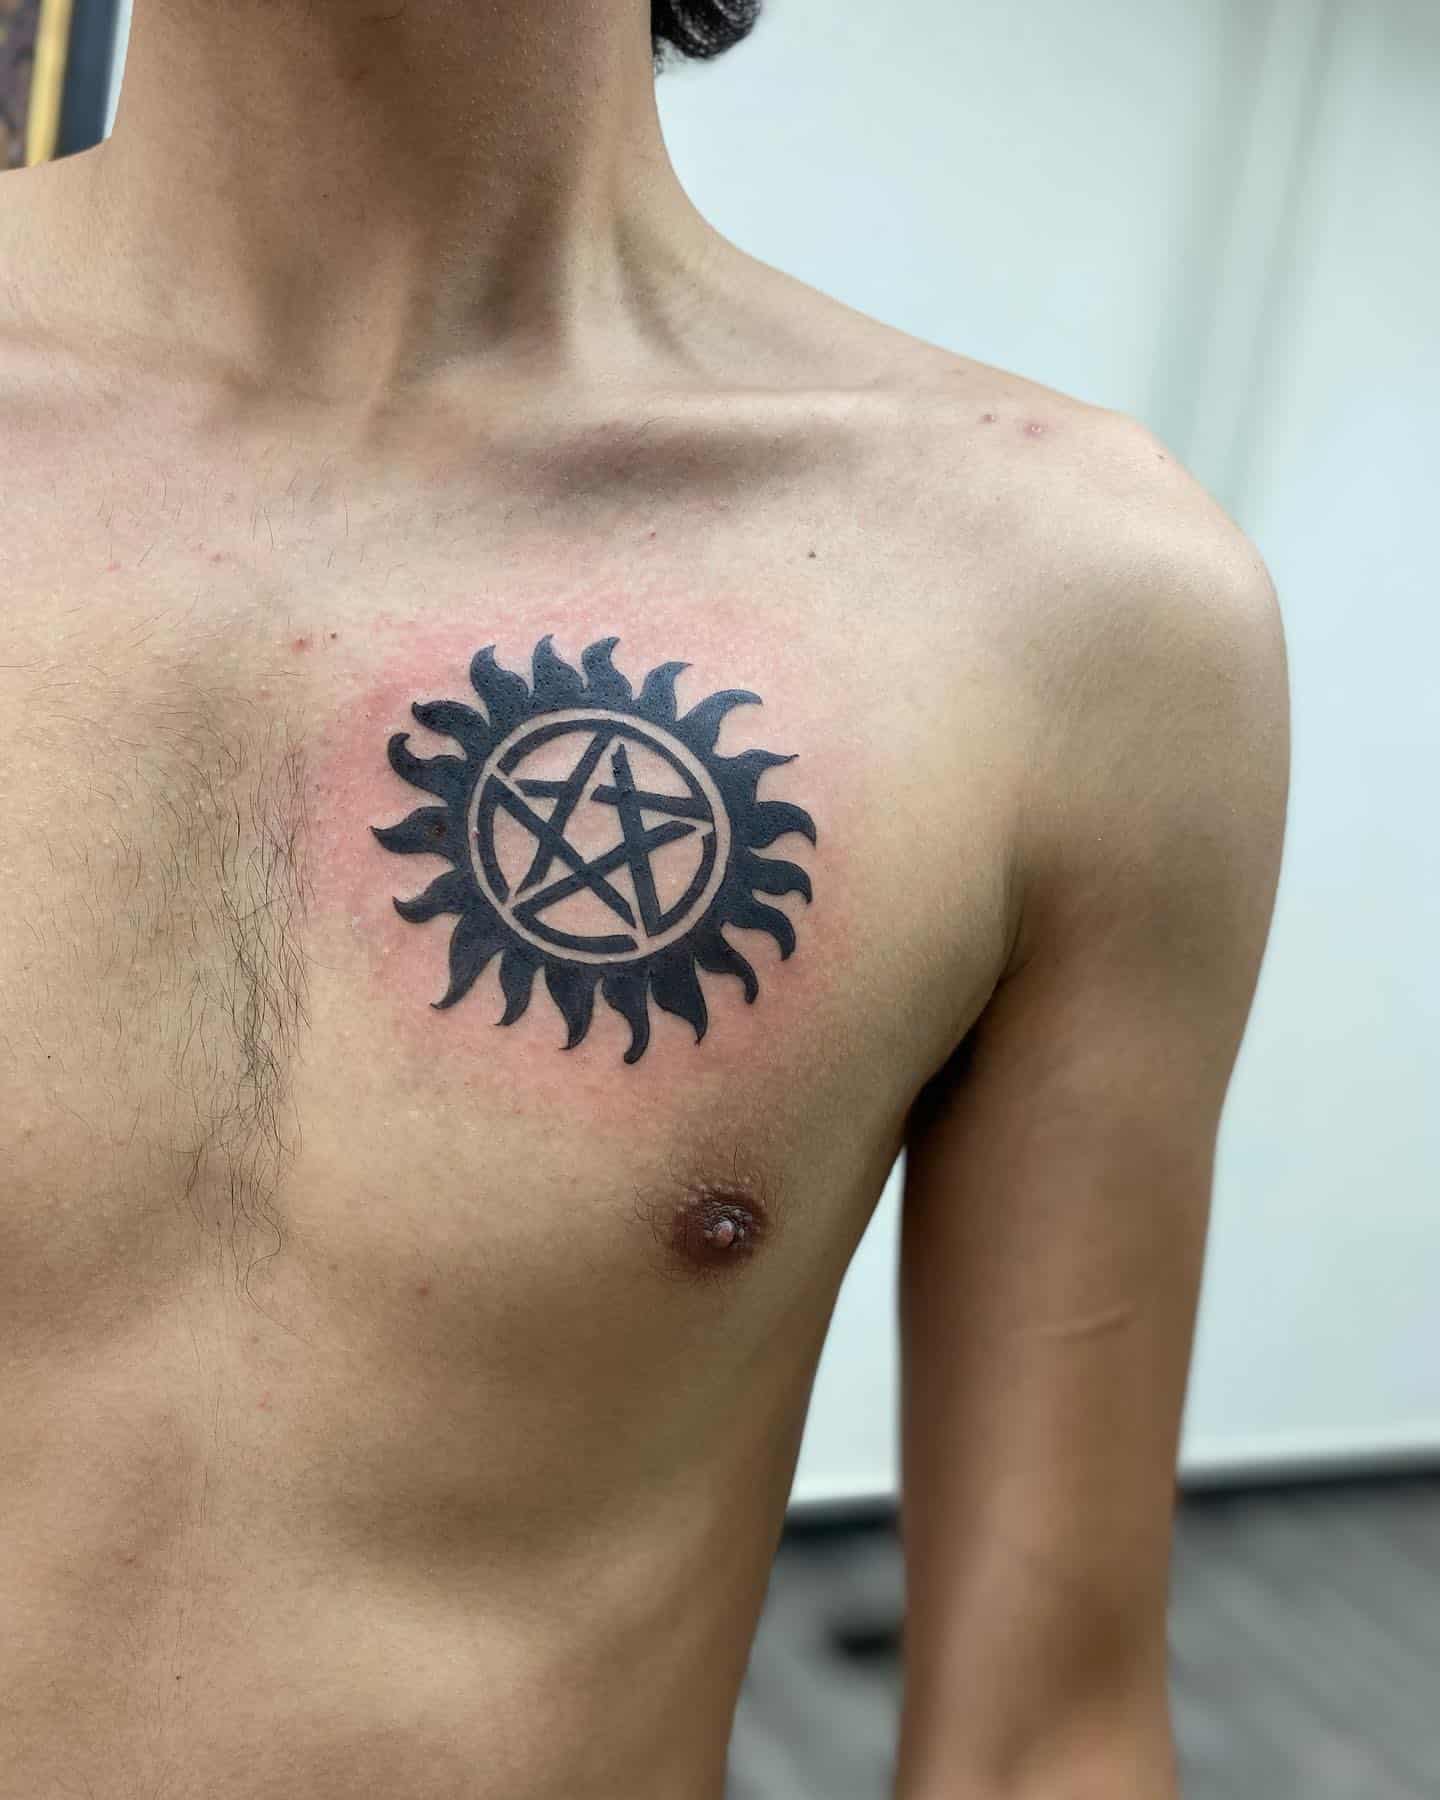 Supernatural (show) Tattoos: – All Things Tattoo